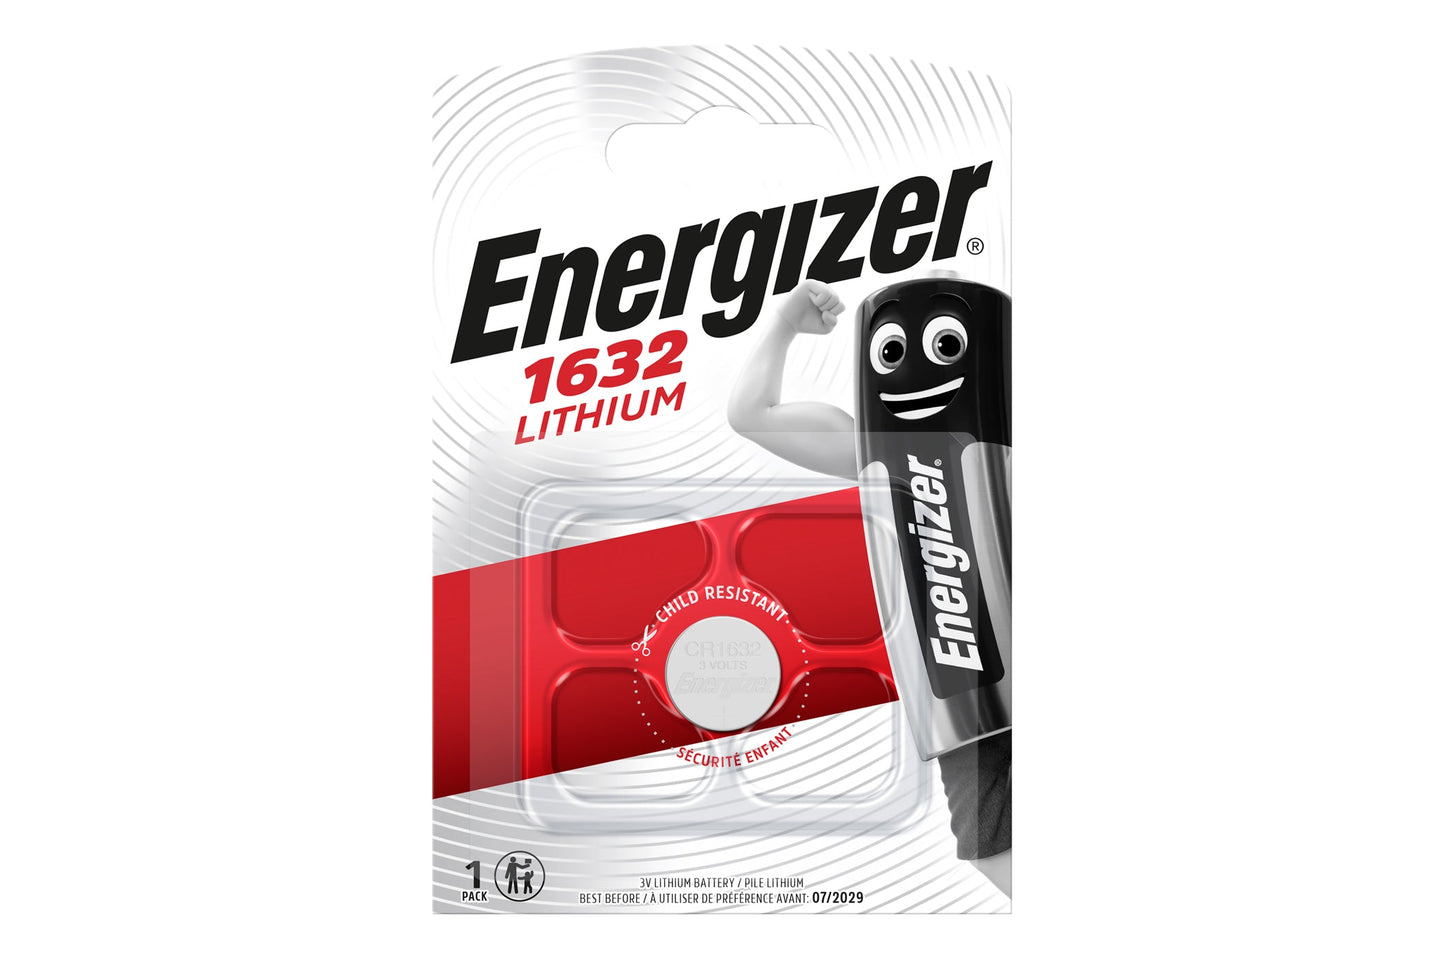 Energizer CR1632 3V Lithium Coin Cell Battery - maplin.co.uk